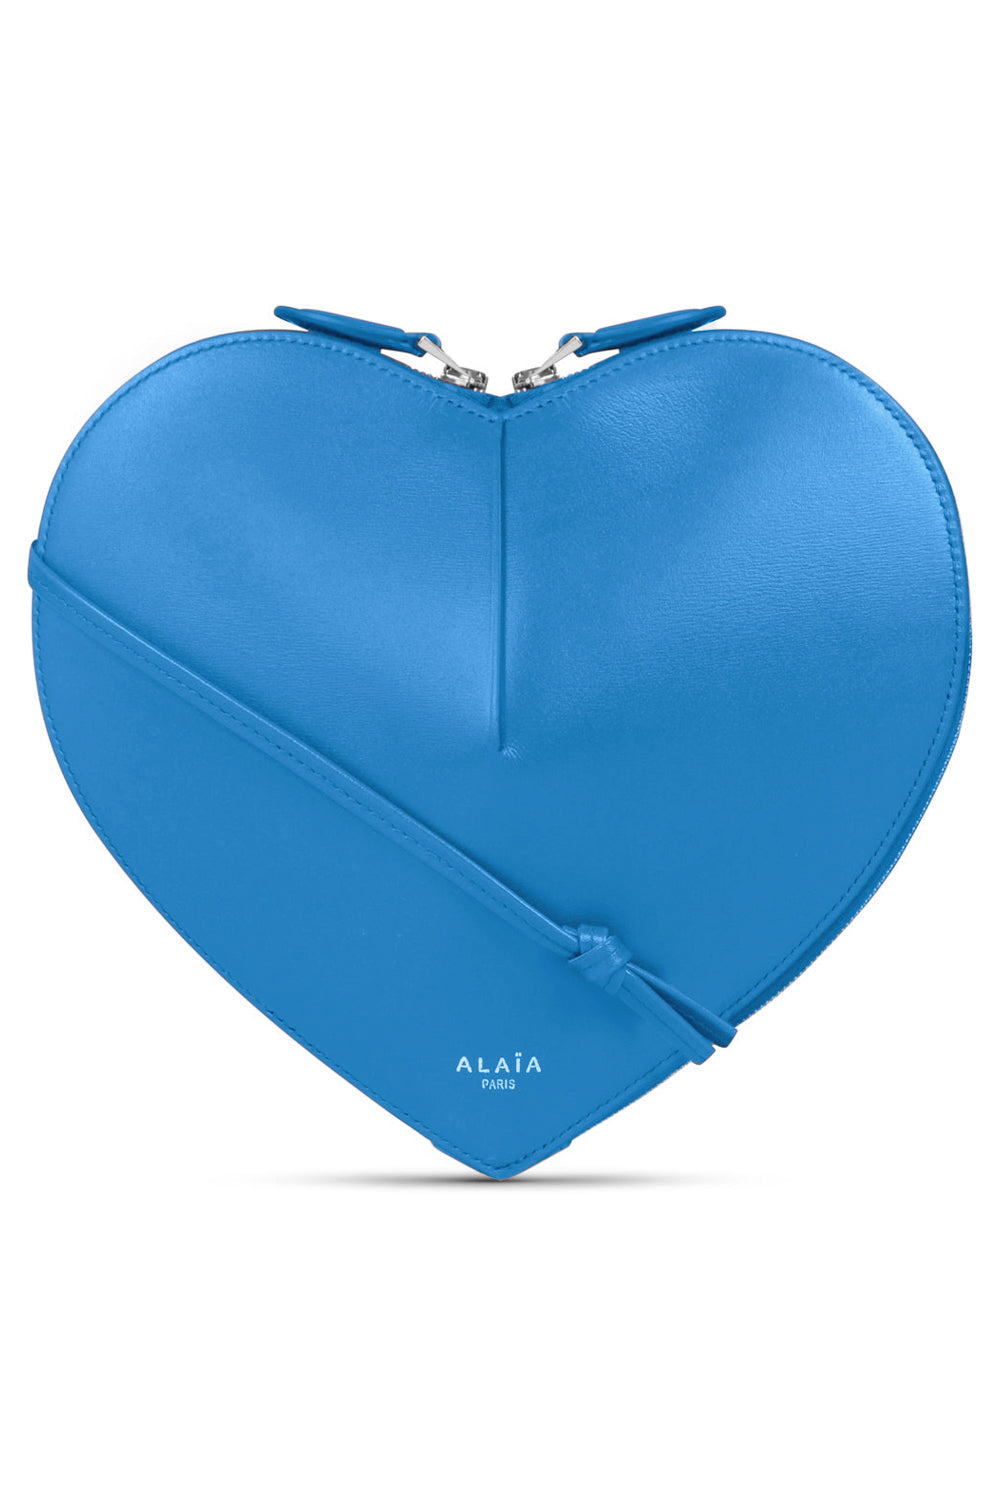 Alaïa Le Coeur Heart Metallic Crossbody Bag in White